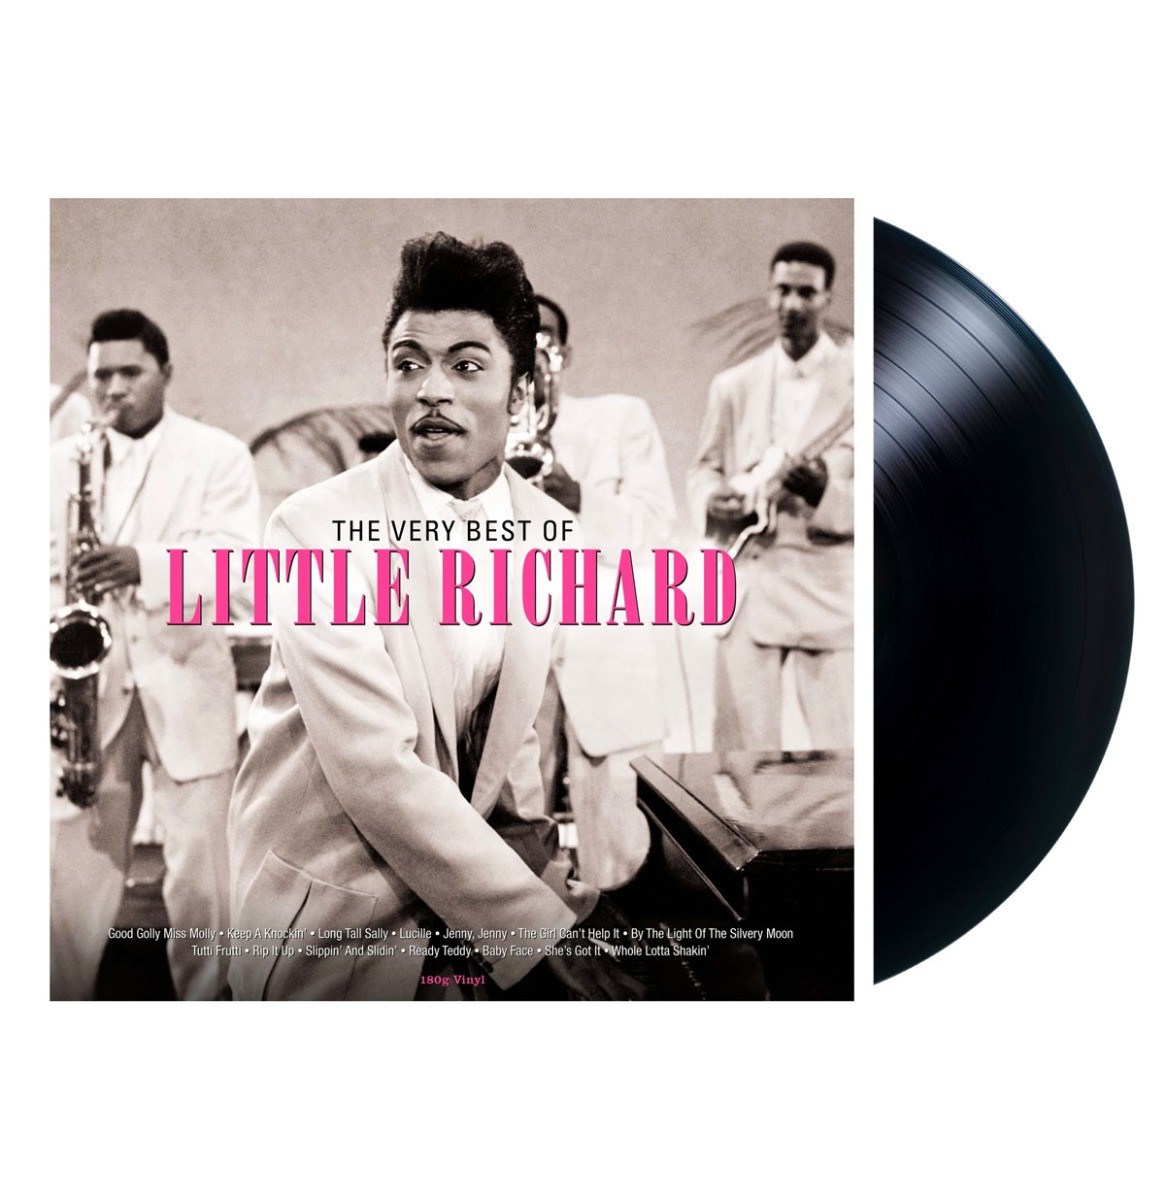 Little Richard - The Very Best of Little Richard LP